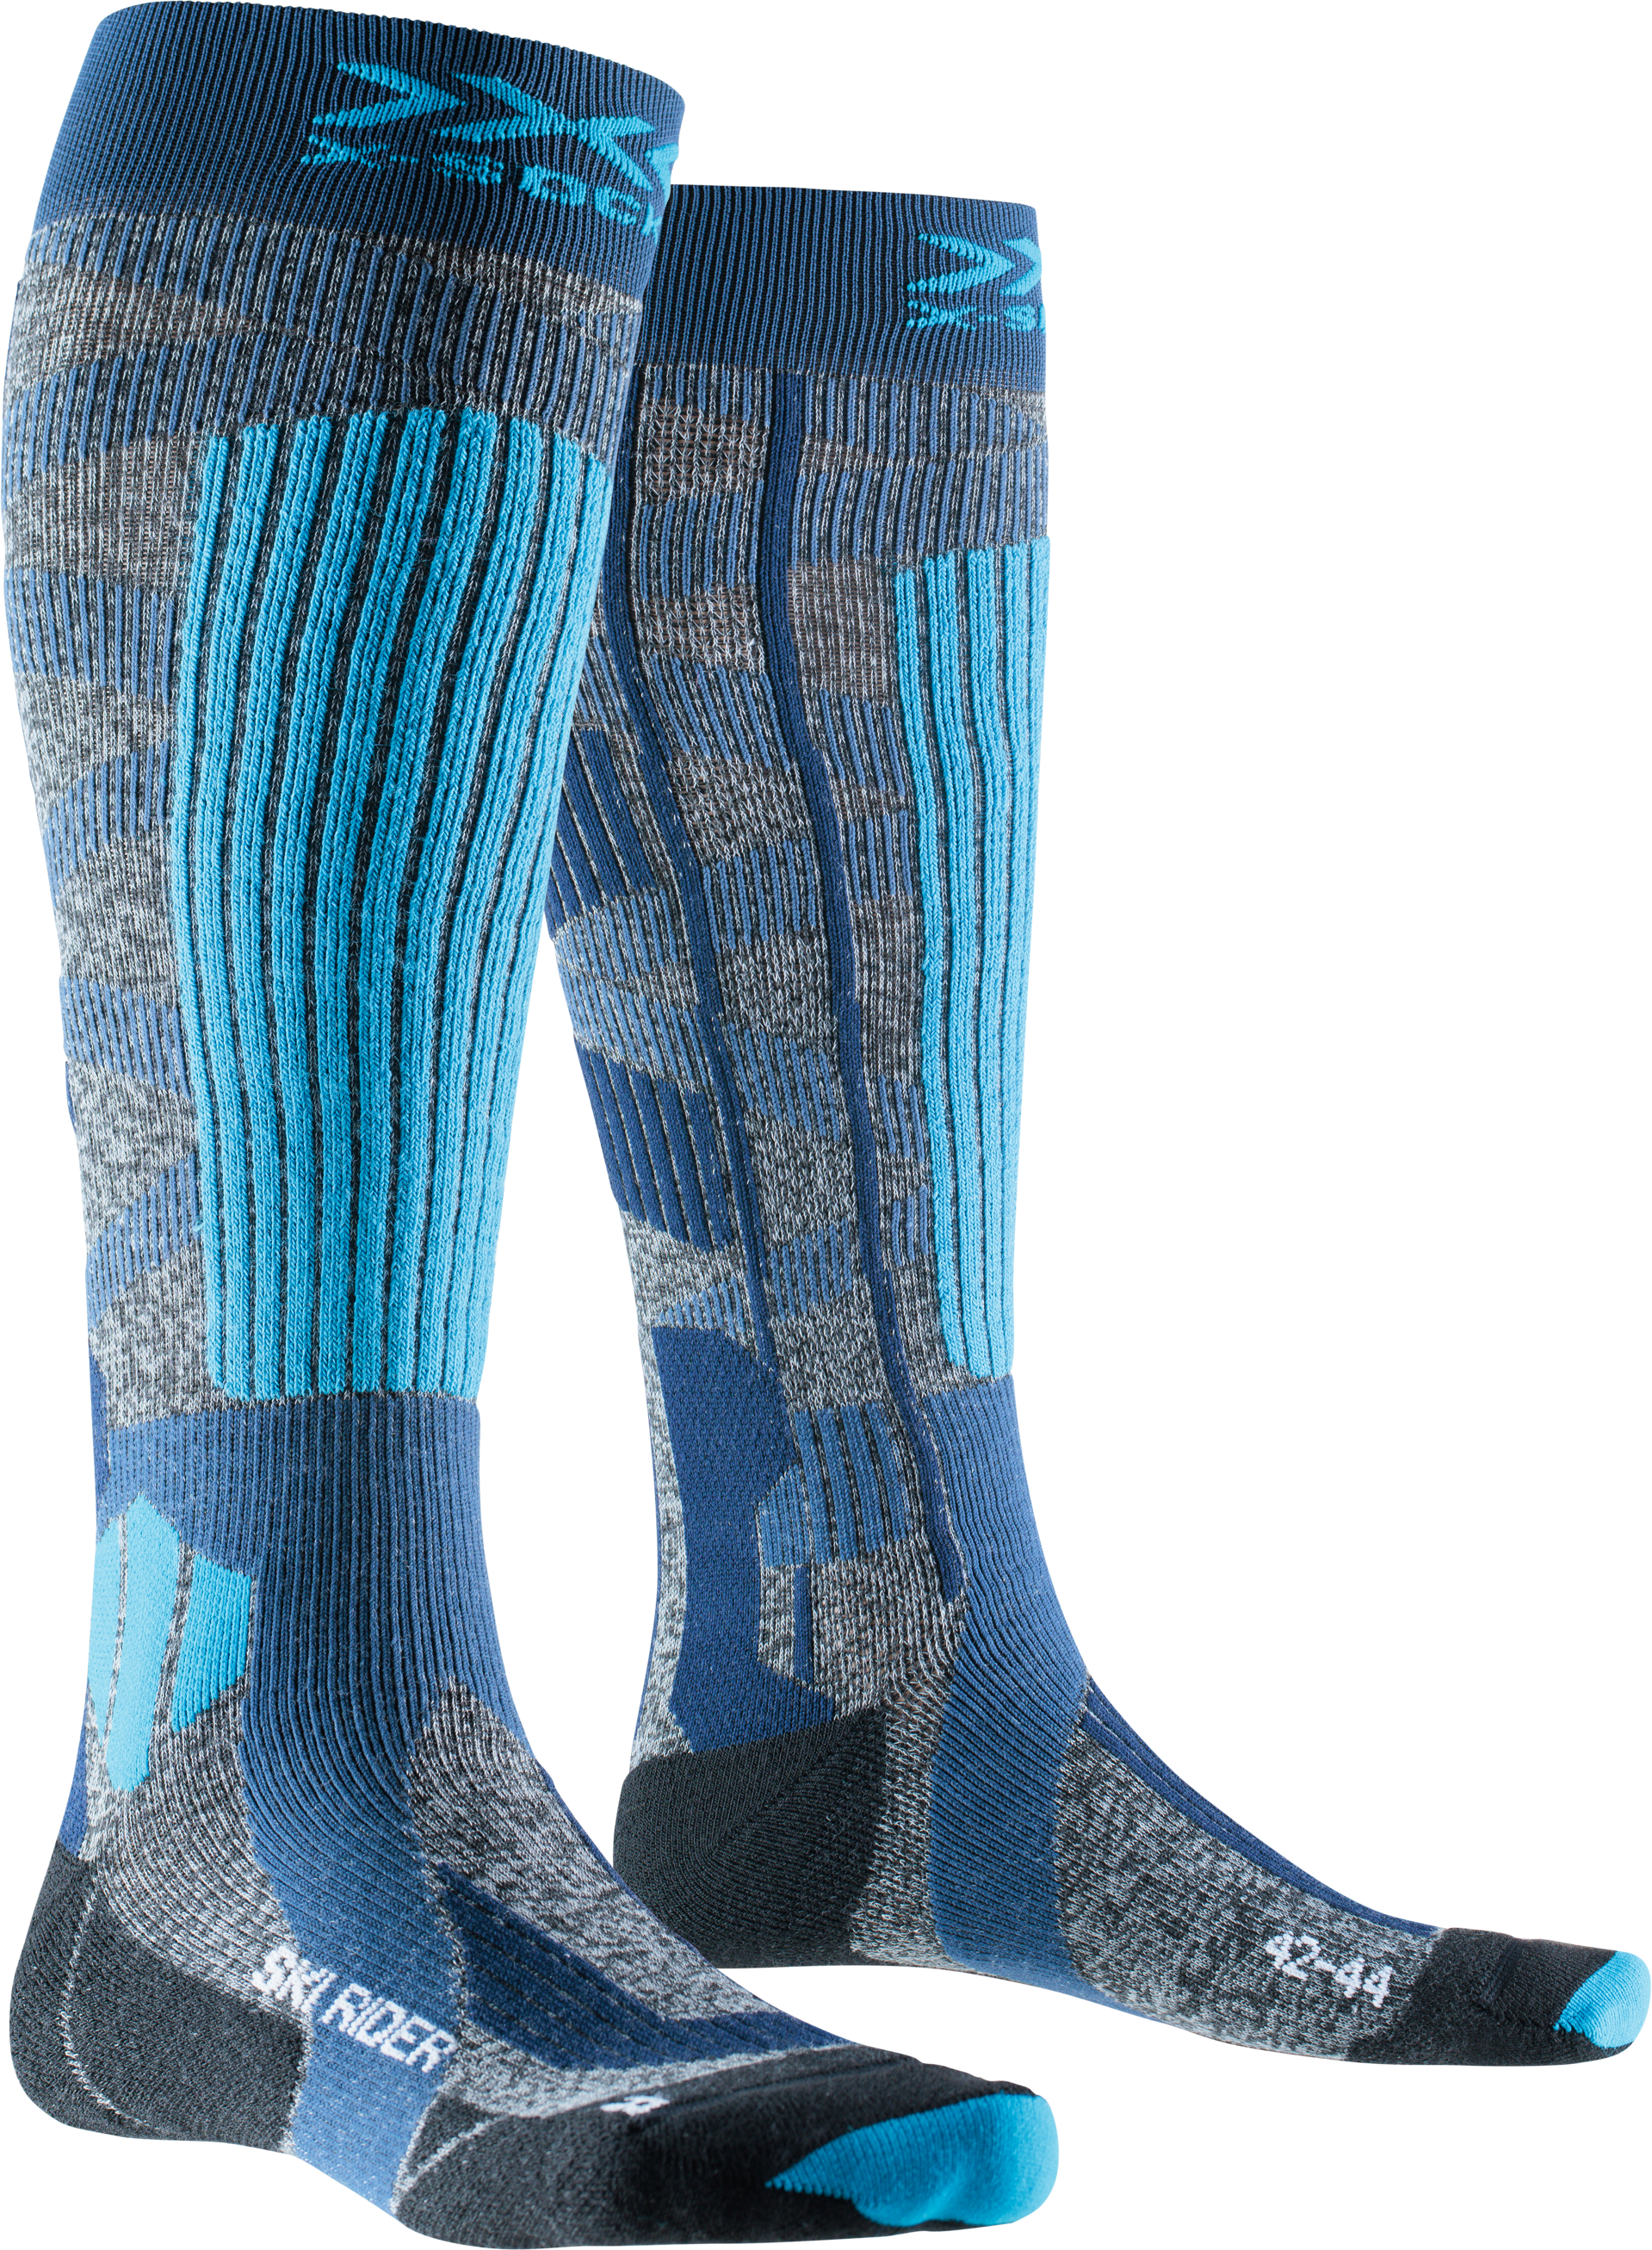 Calcetines de esquí grises para mujer X-Socks Ski Rider 4.0 xssskrw19w-g152